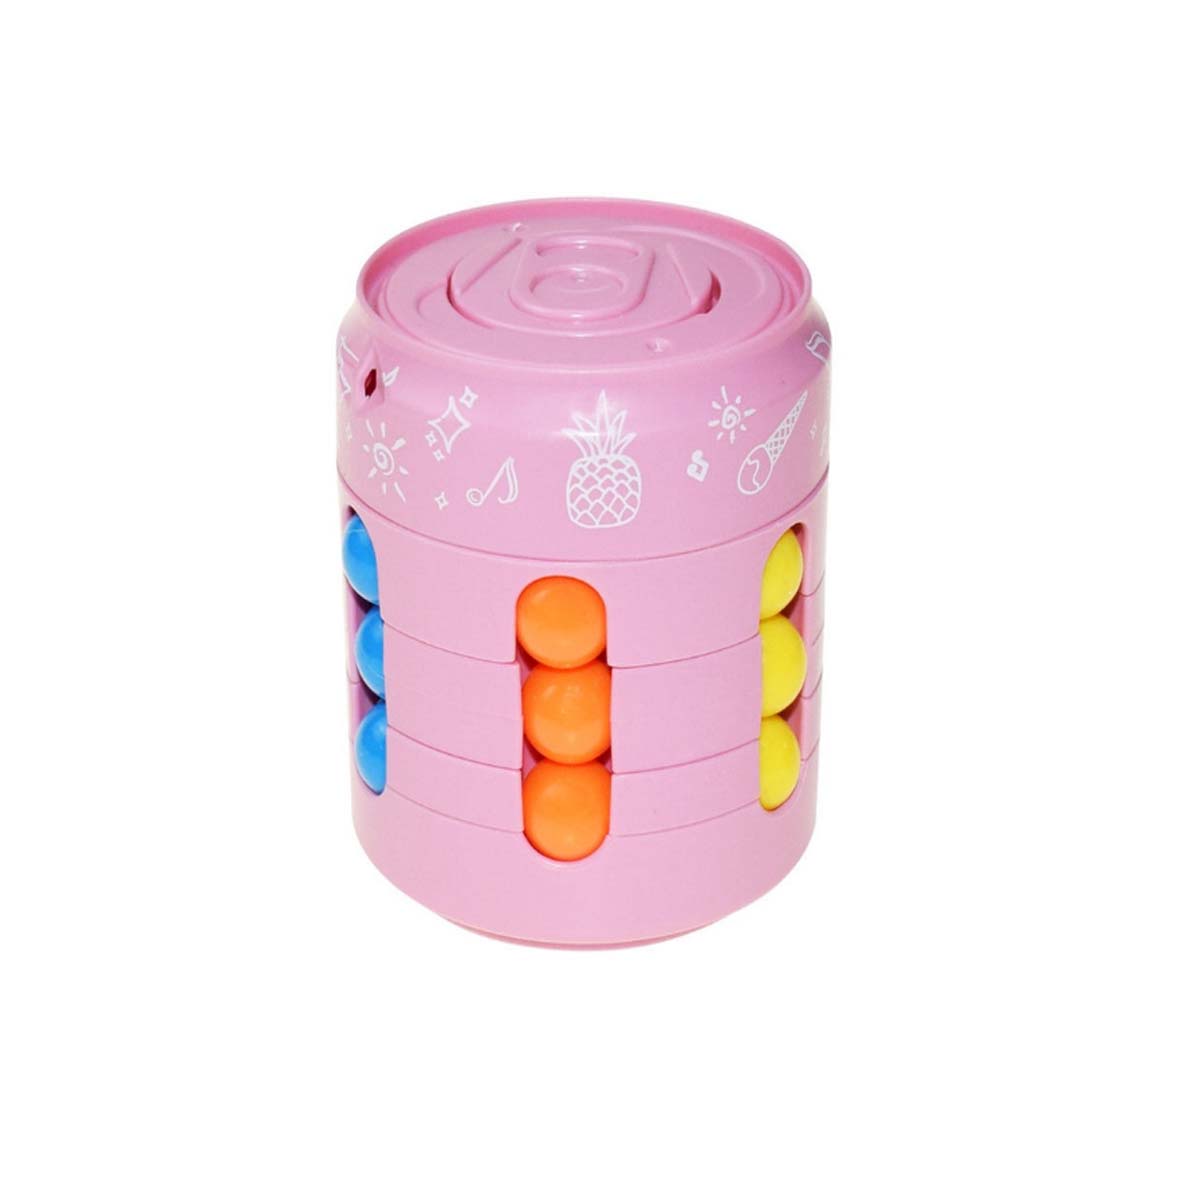 Головоломка банка спиннер Cans spinner Cube, цвет светло розовый